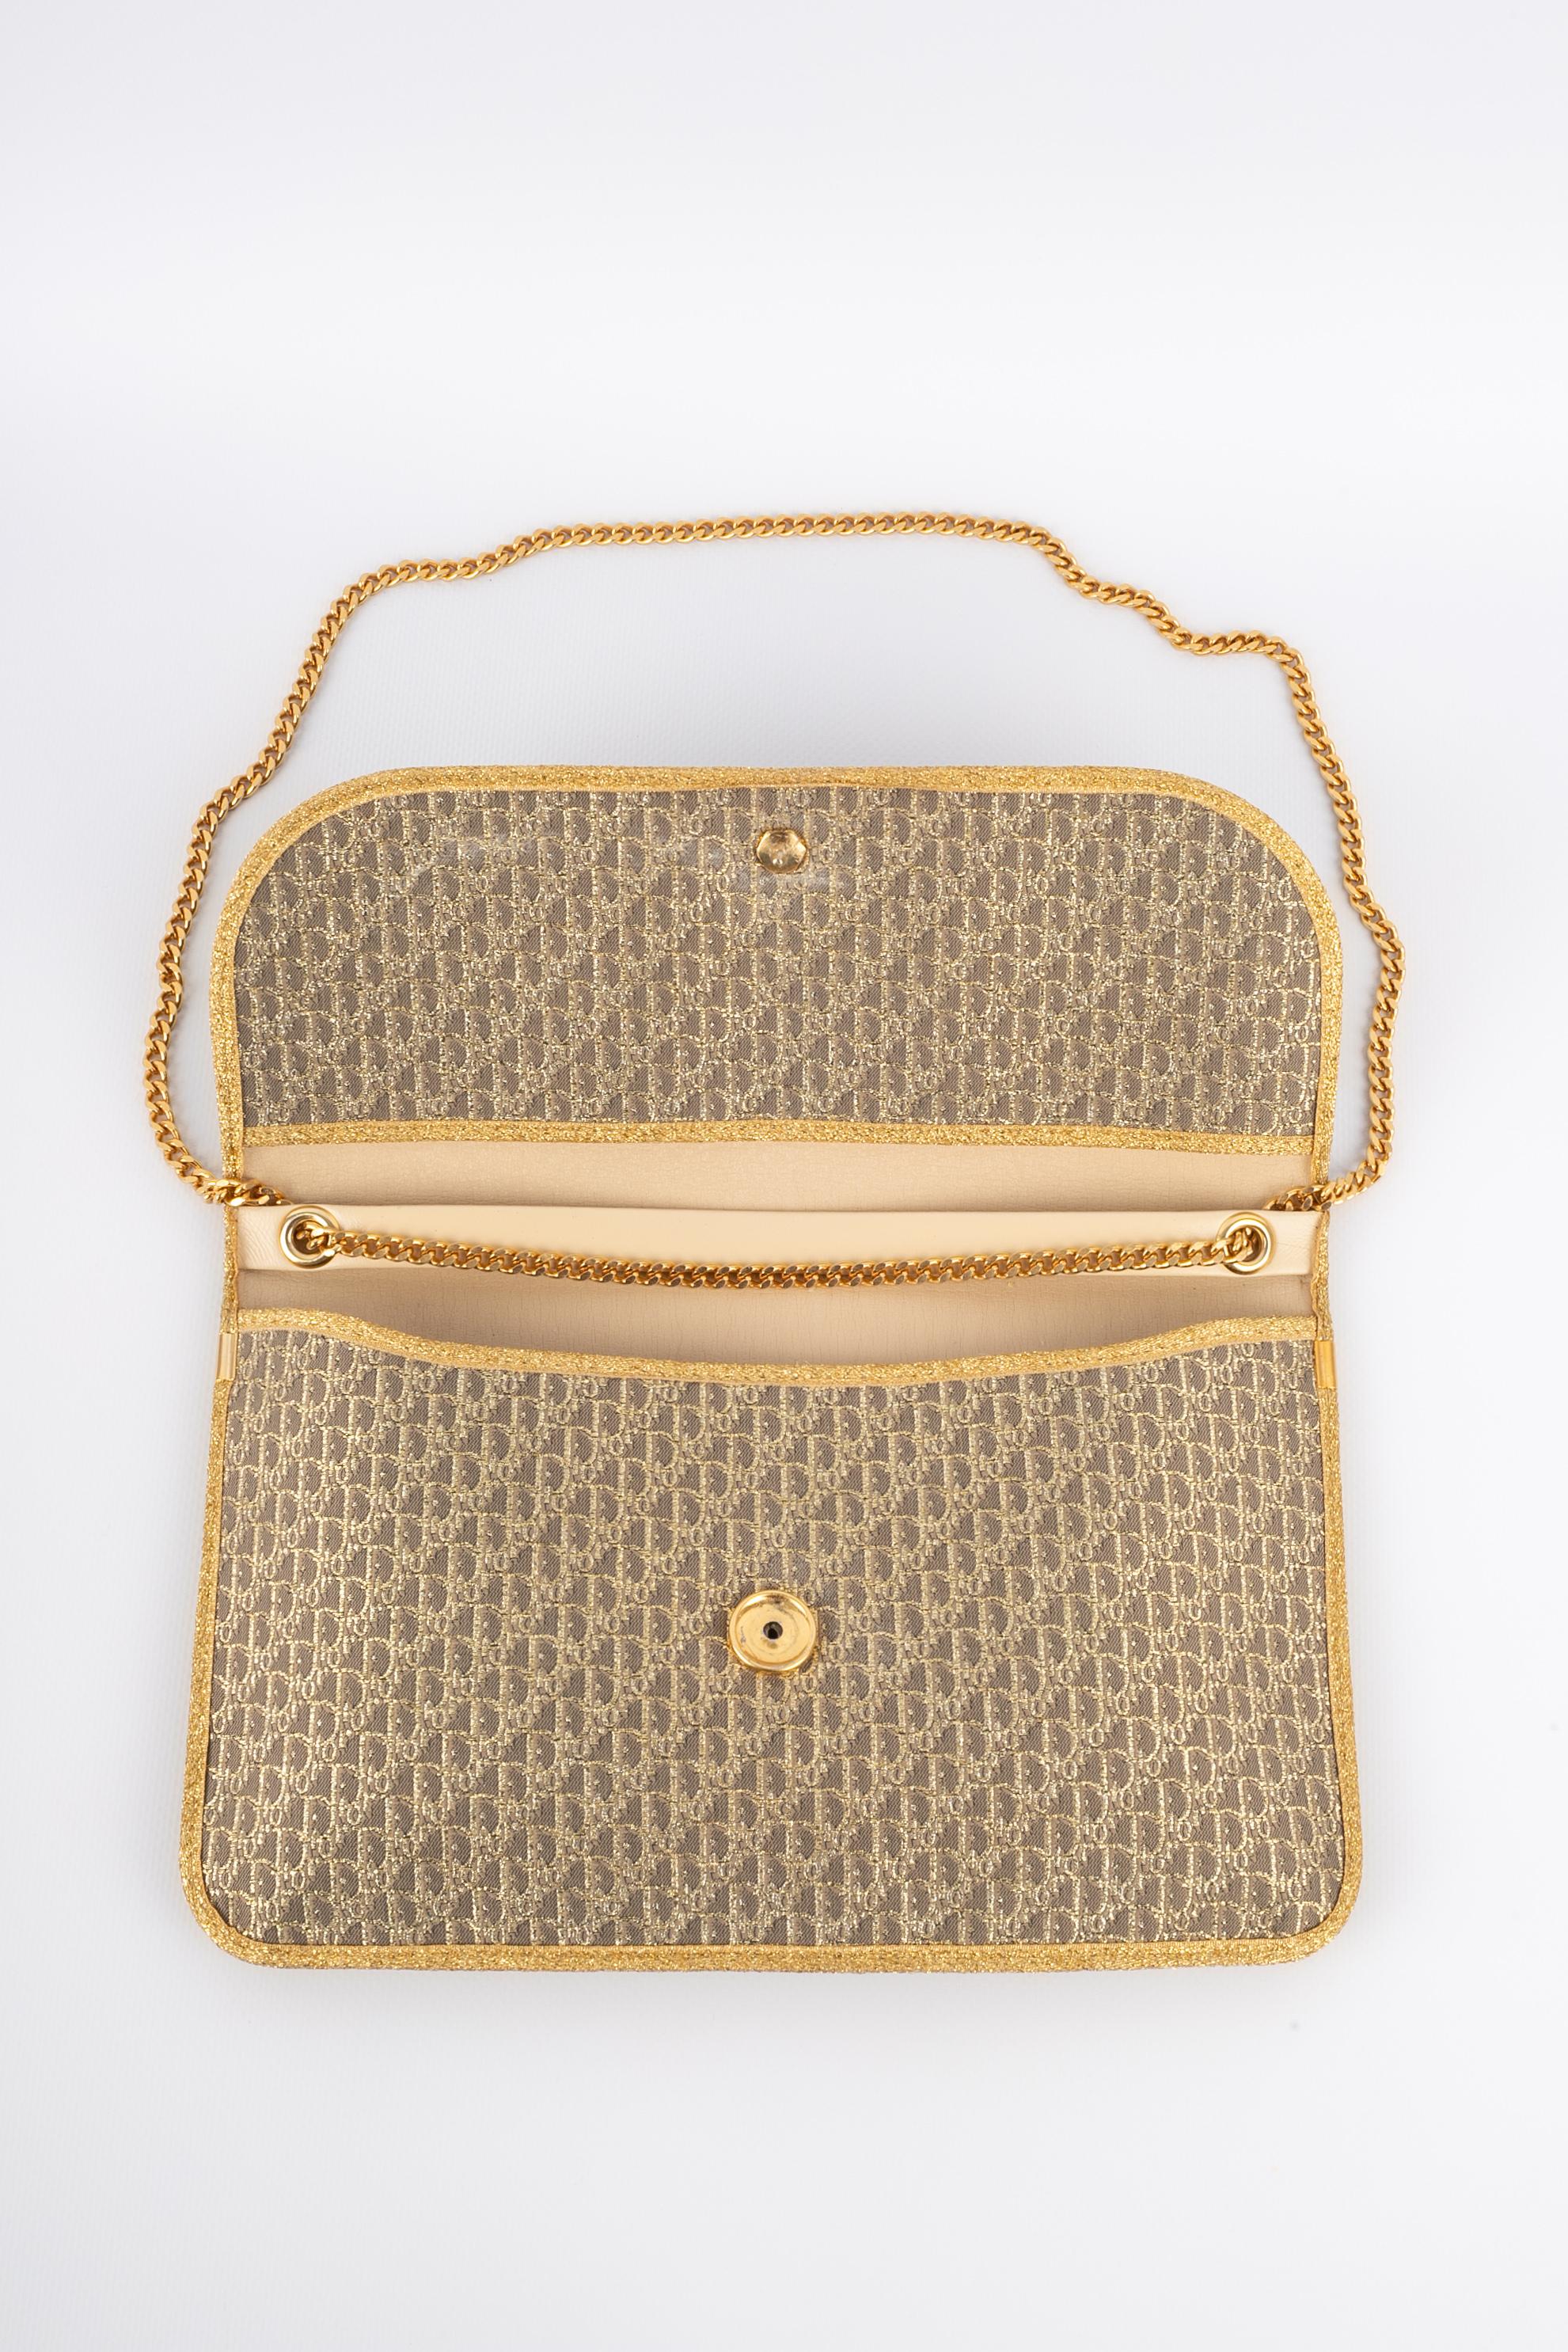 Christian Dior bag / clutch In Excellent Condition For Sale In SAINT-OUEN-SUR-SEINE, FR